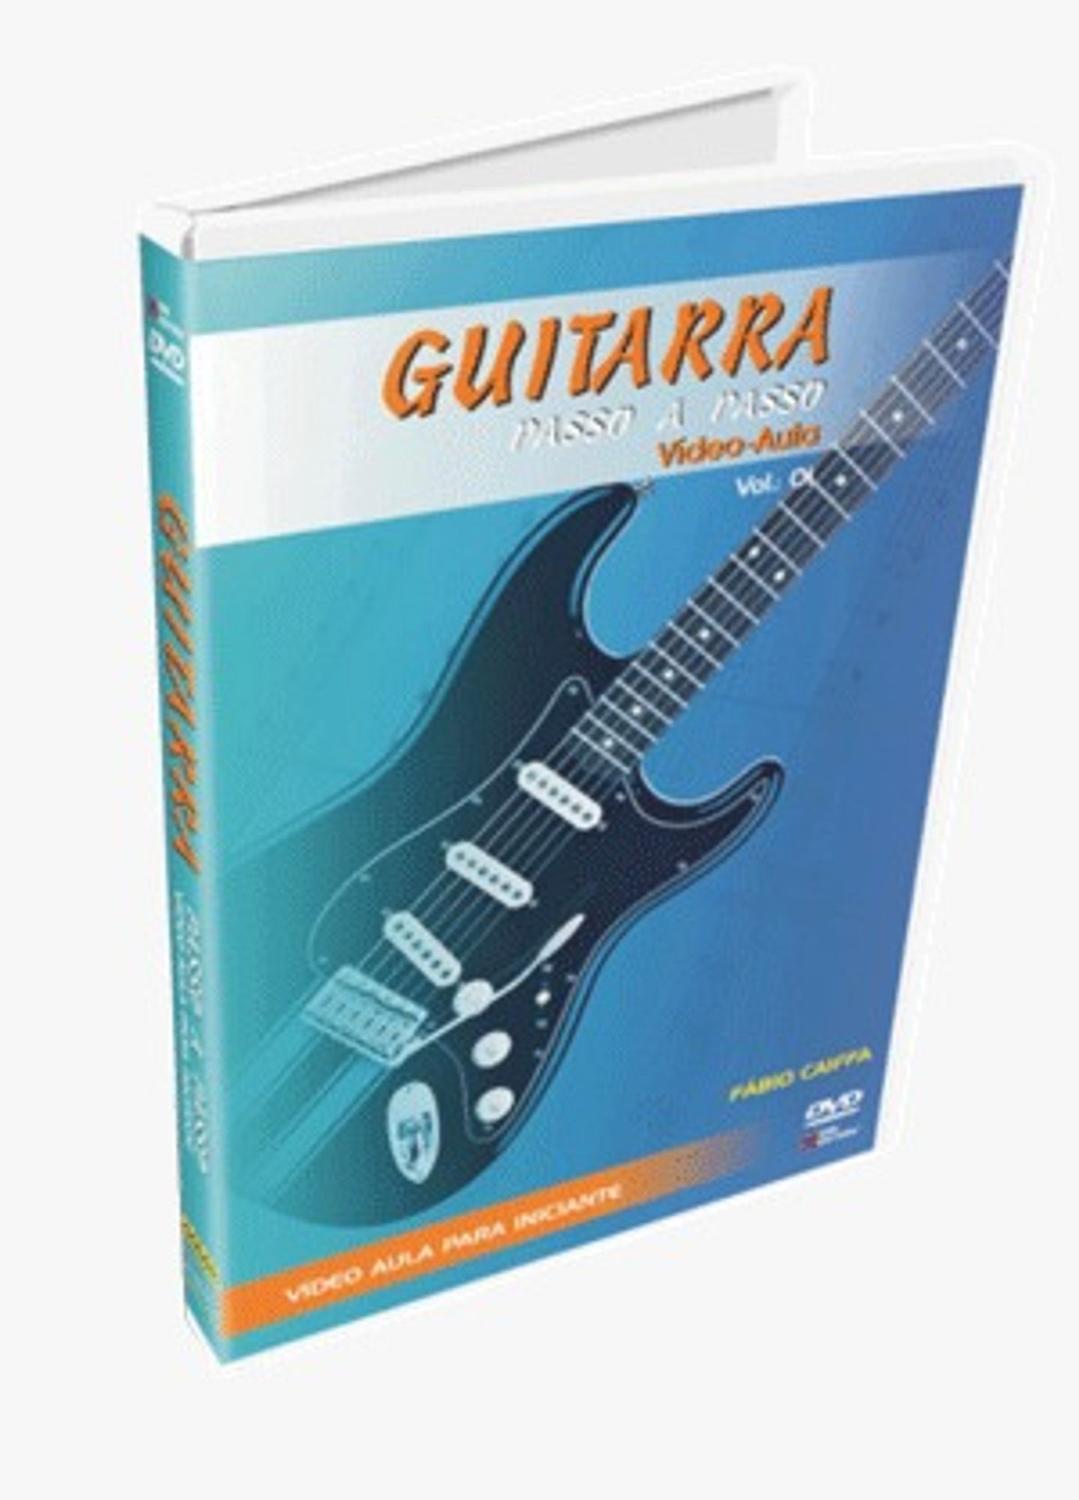 Cater North America Hubert Hudson DVD video aula passo a passo Guitarra VOl 1 - EME editora - DVD Vídeo Aula  / Cursos - Magazine Luiza